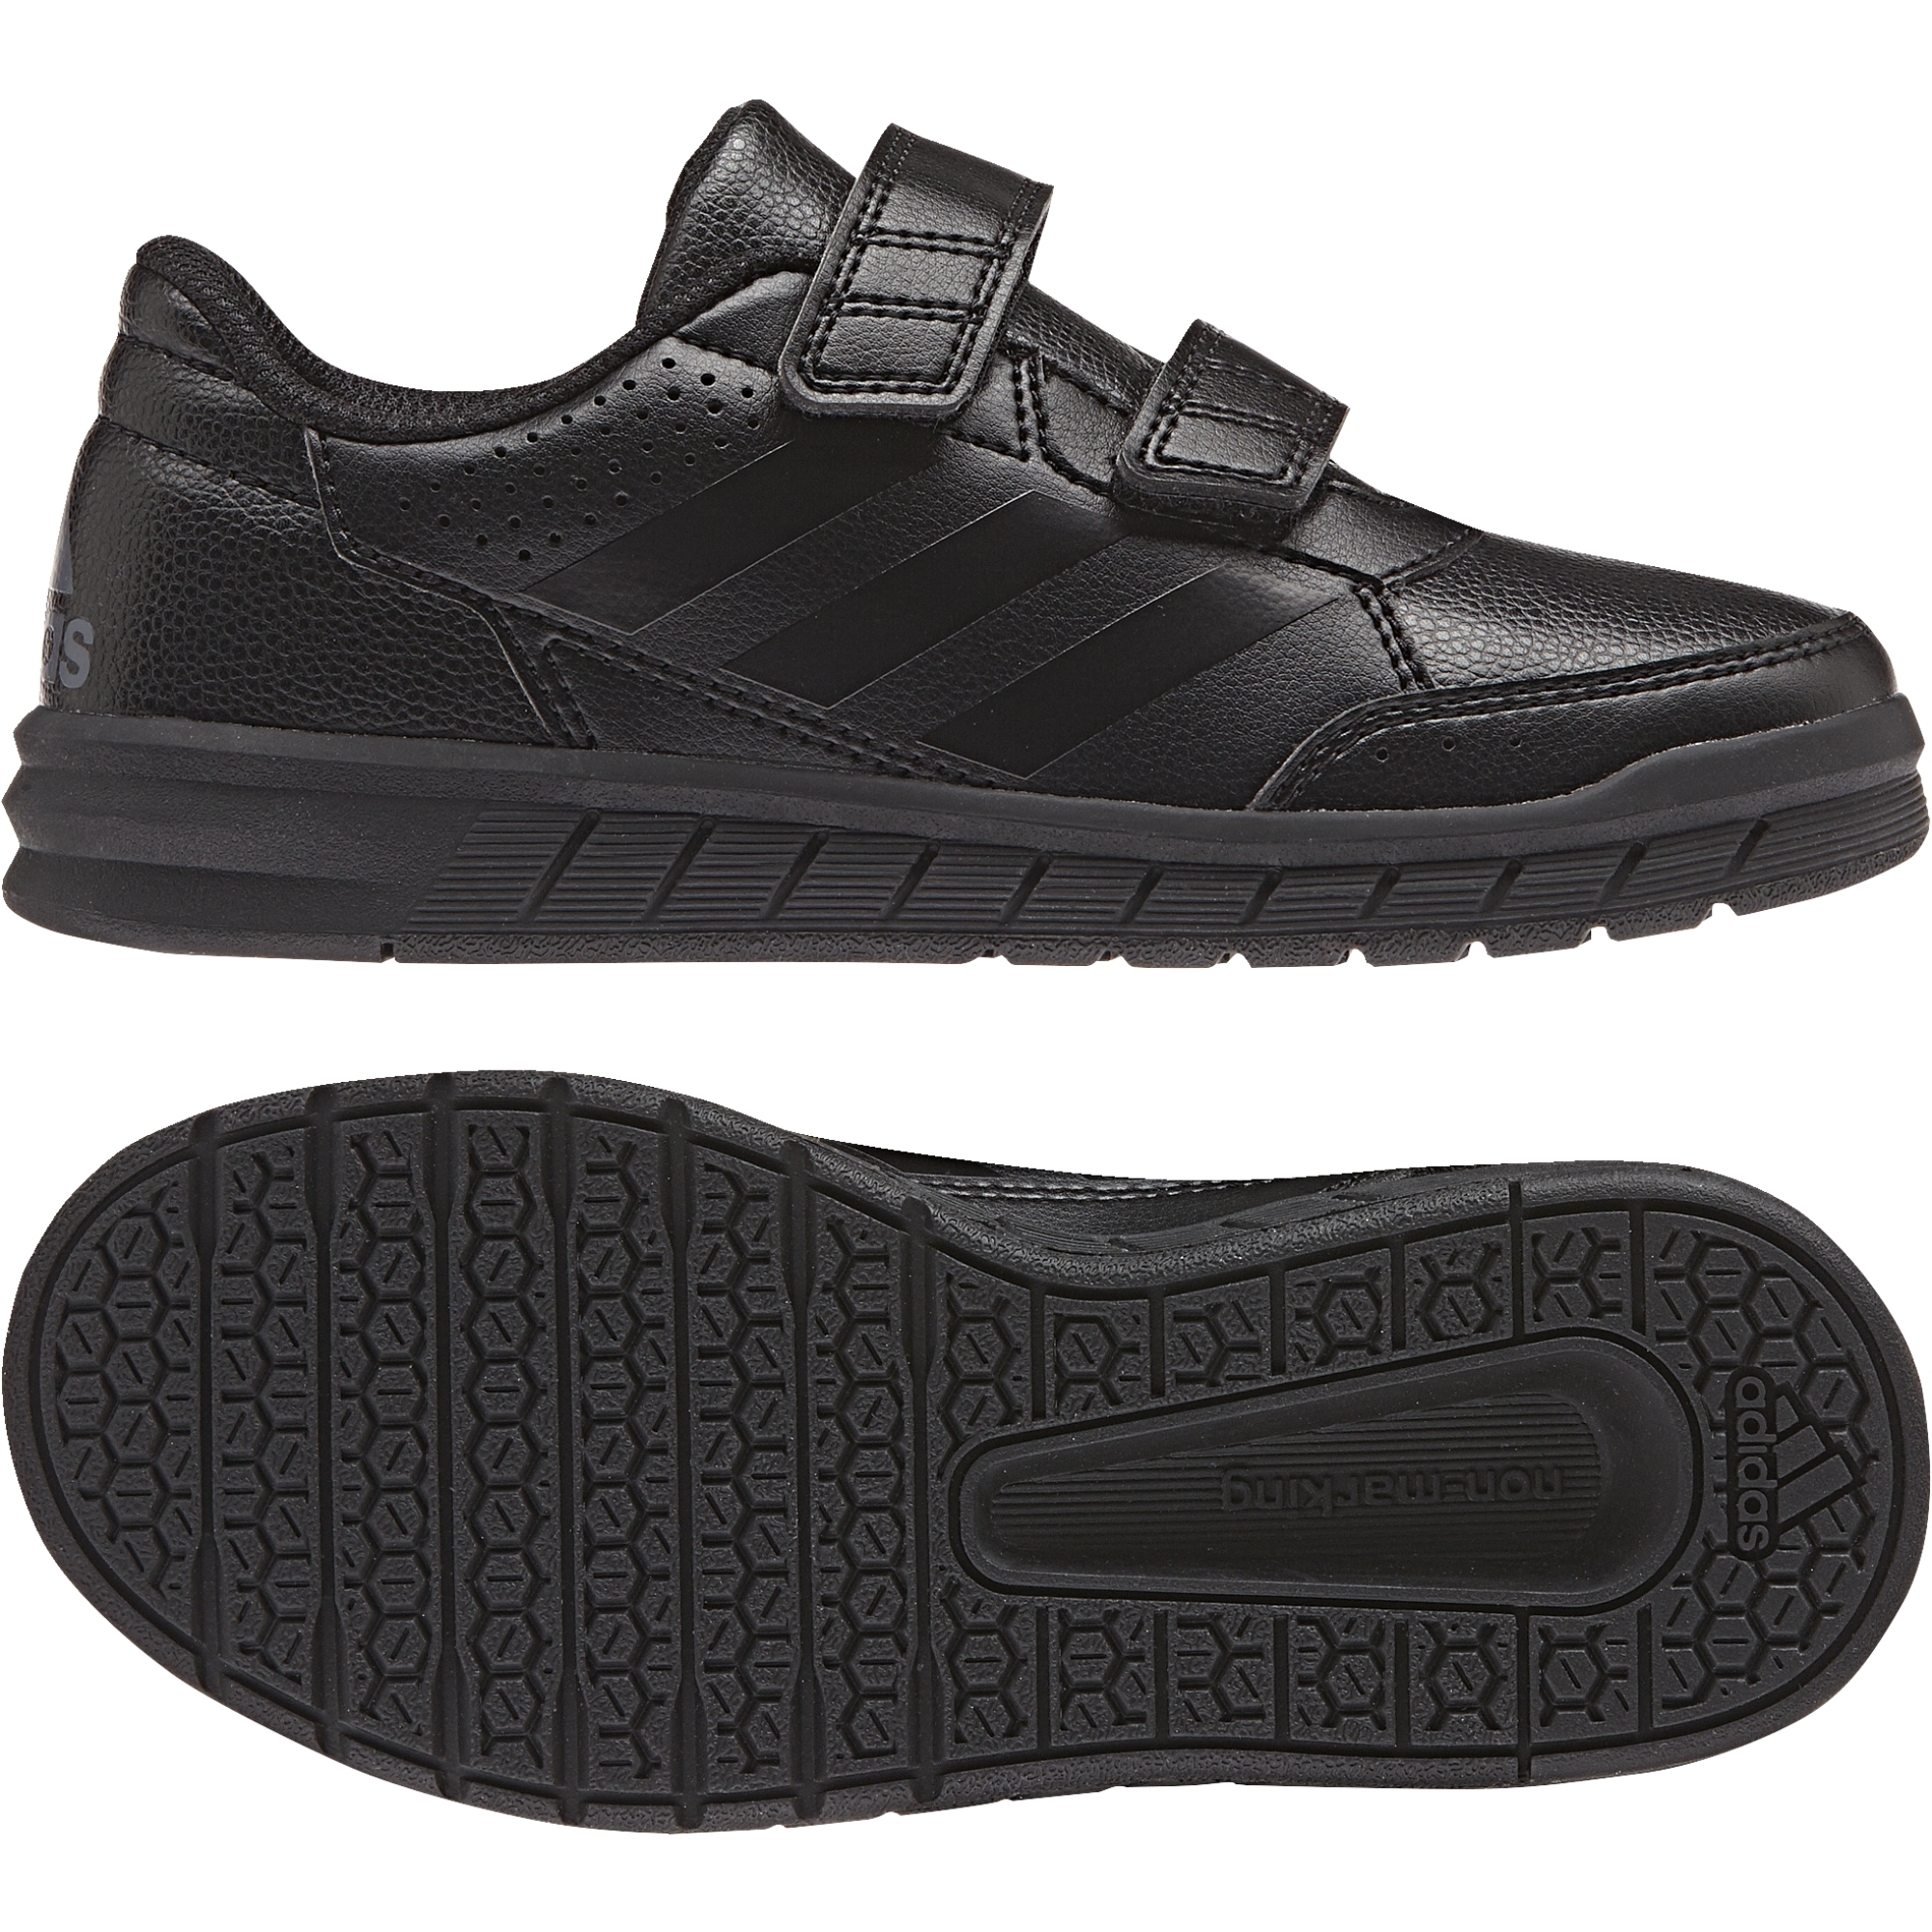 altasport shoes black